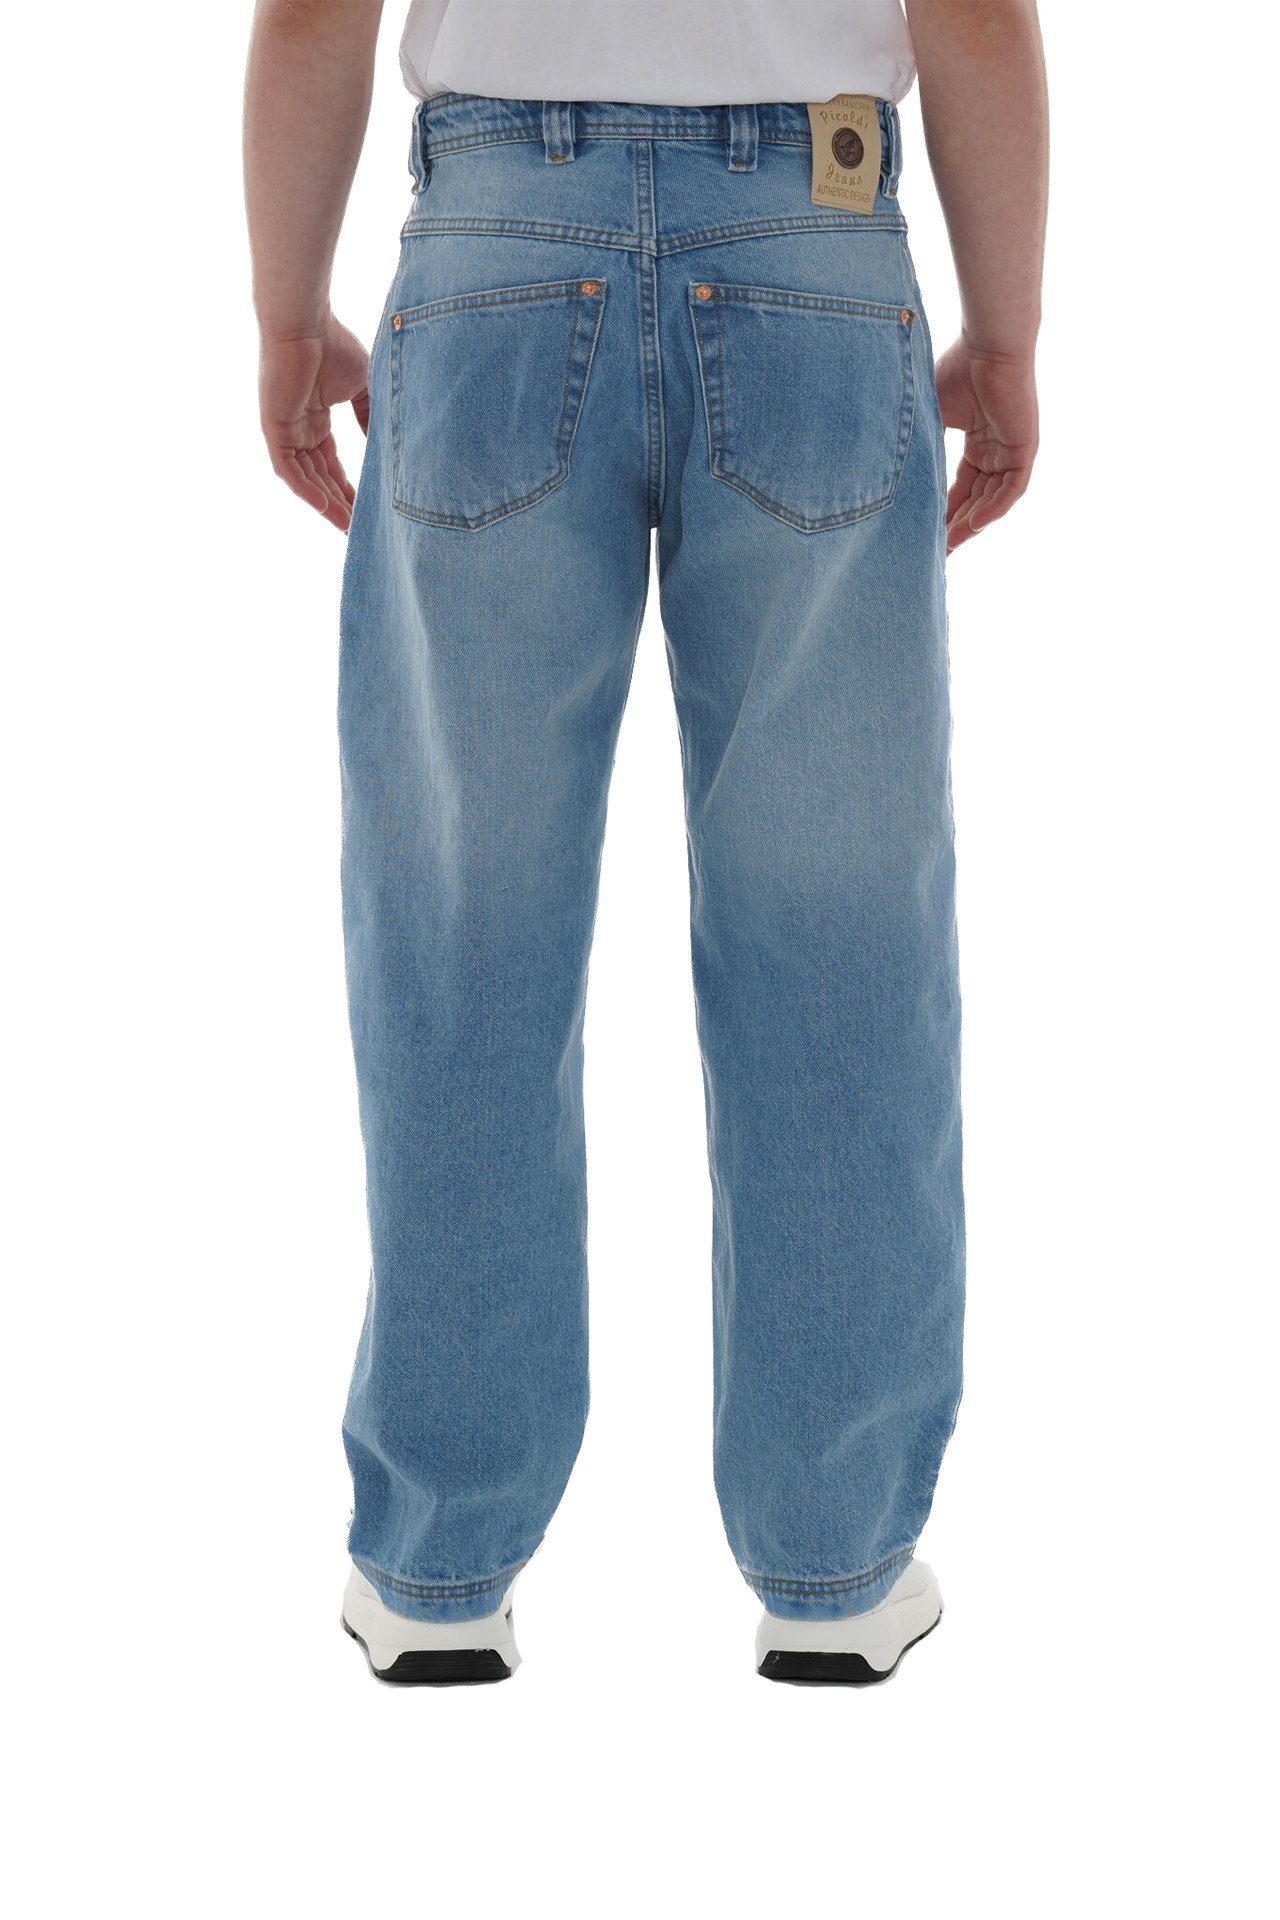 Jeans 471 Zicco Five Jeans Weite Loose PICALDI Raze Fit, Jeans Pocket